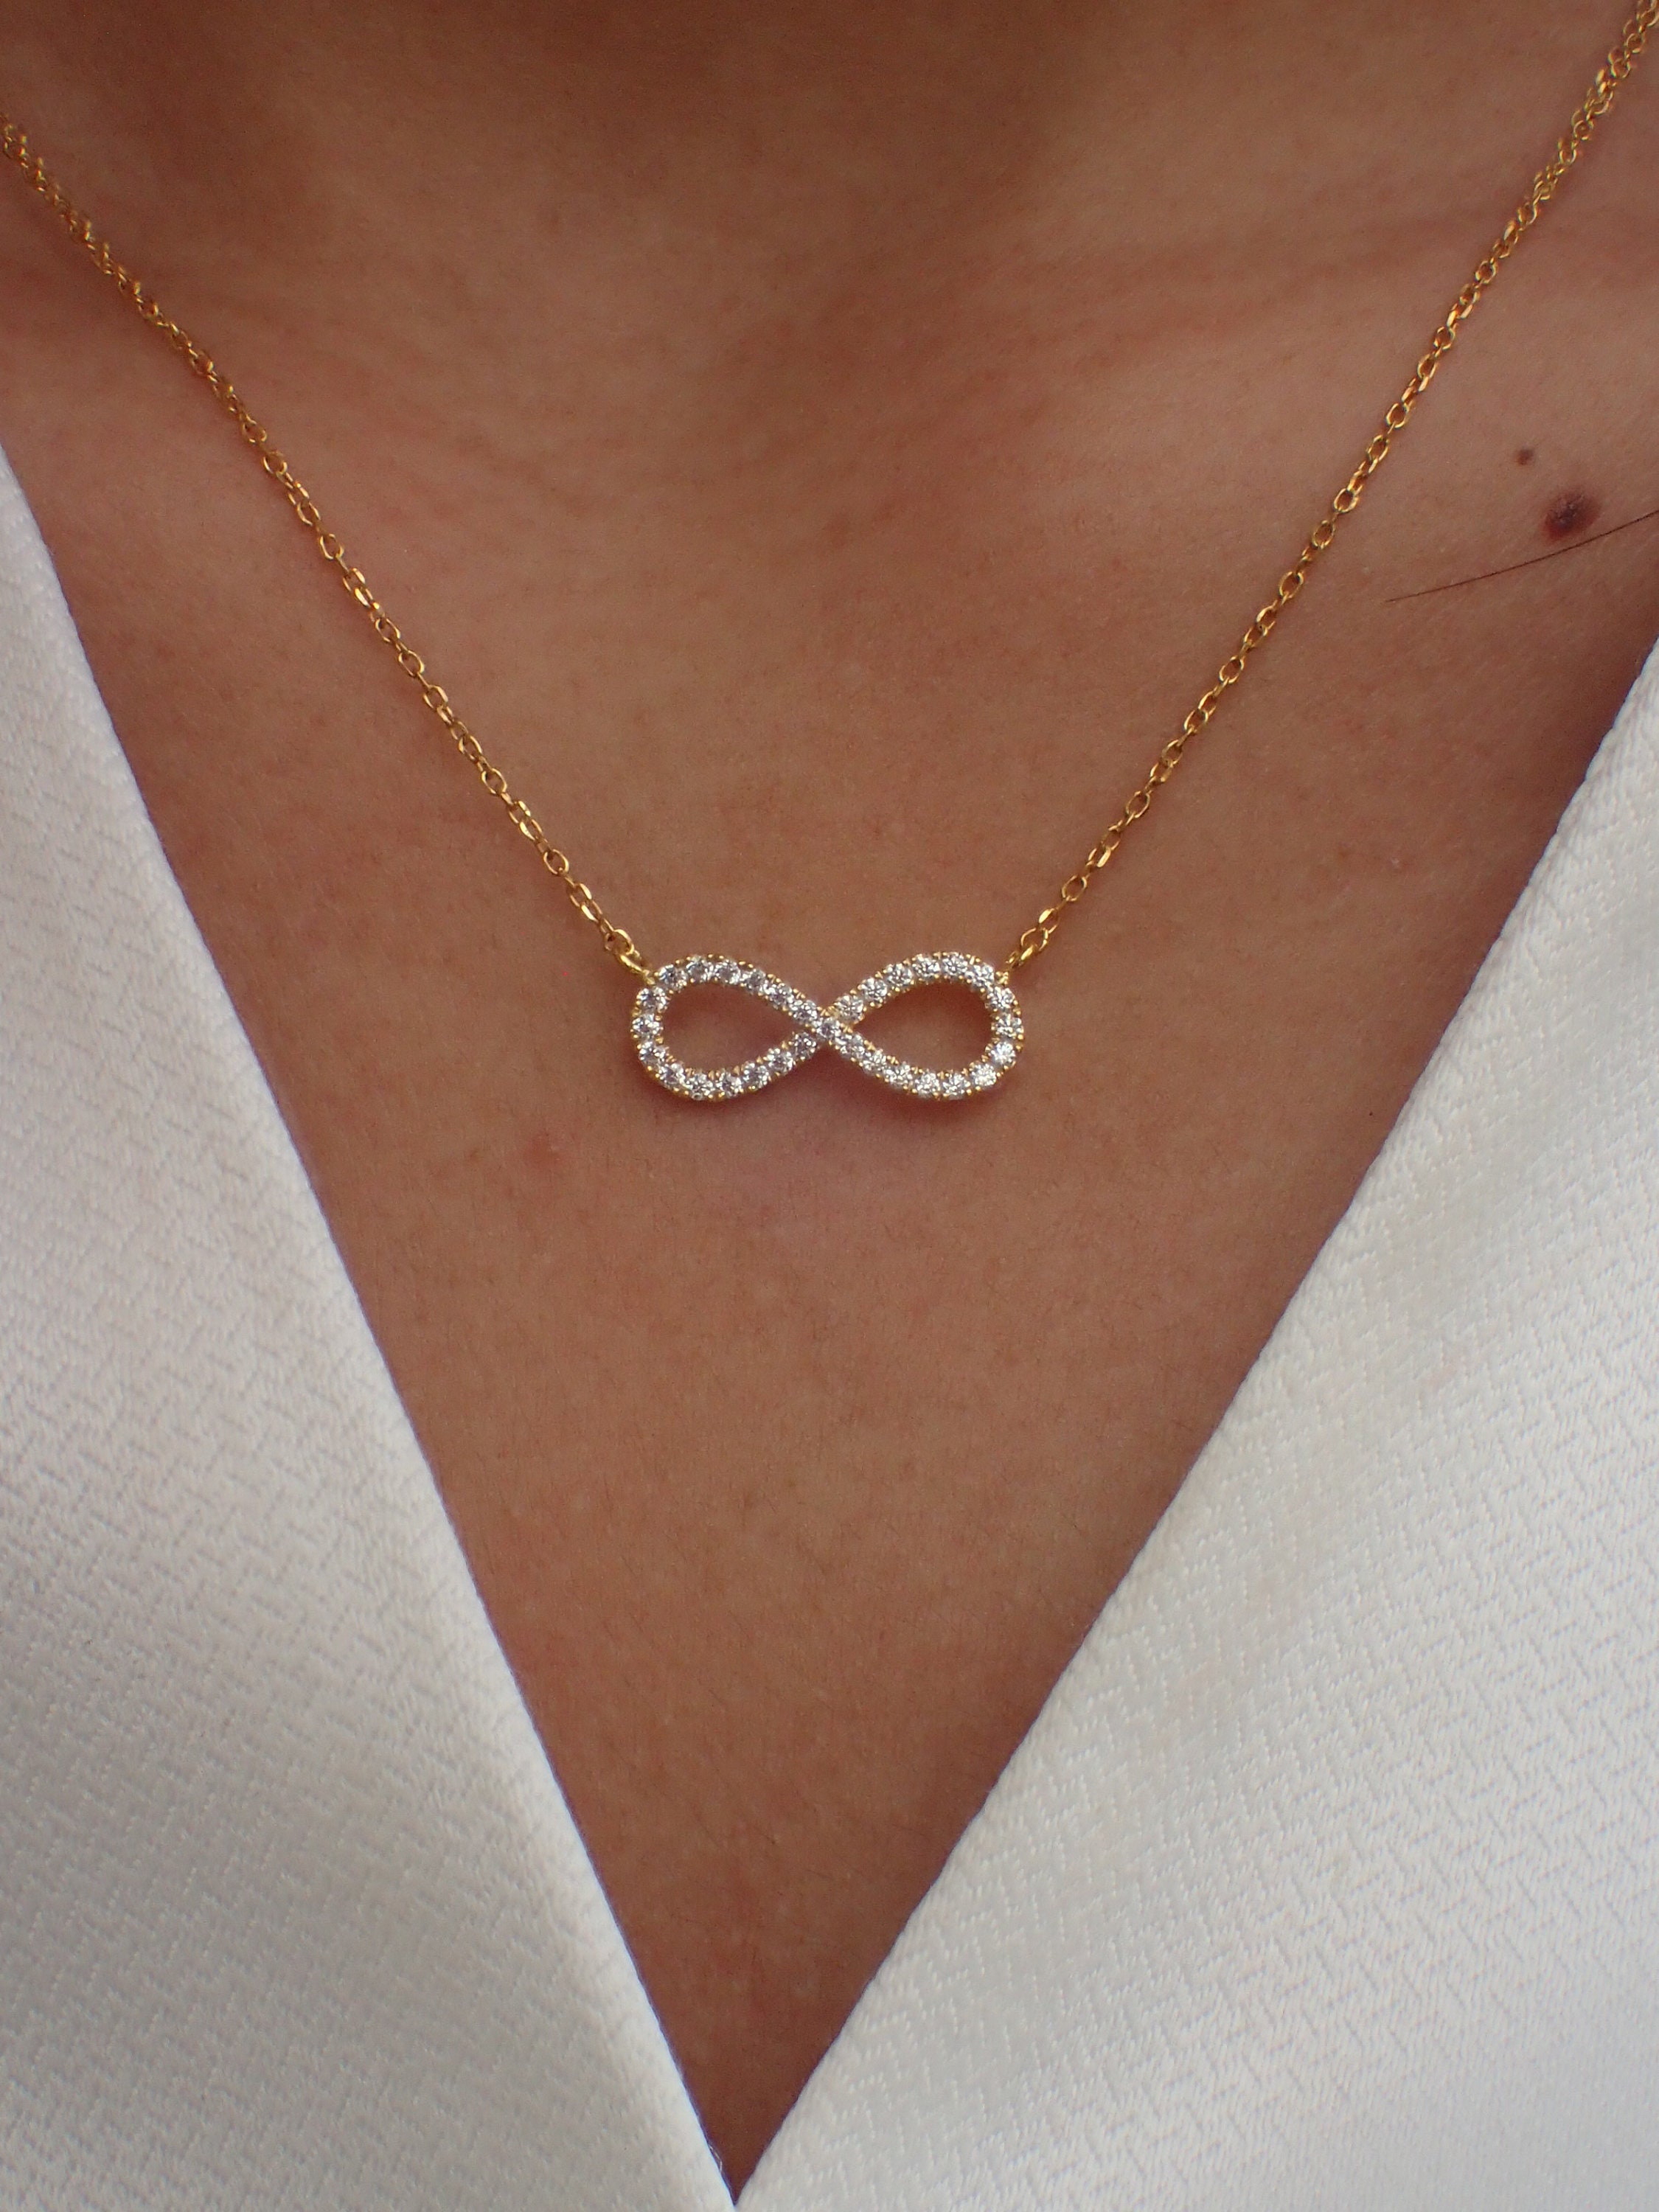 【Tiffany】Infinity pendant